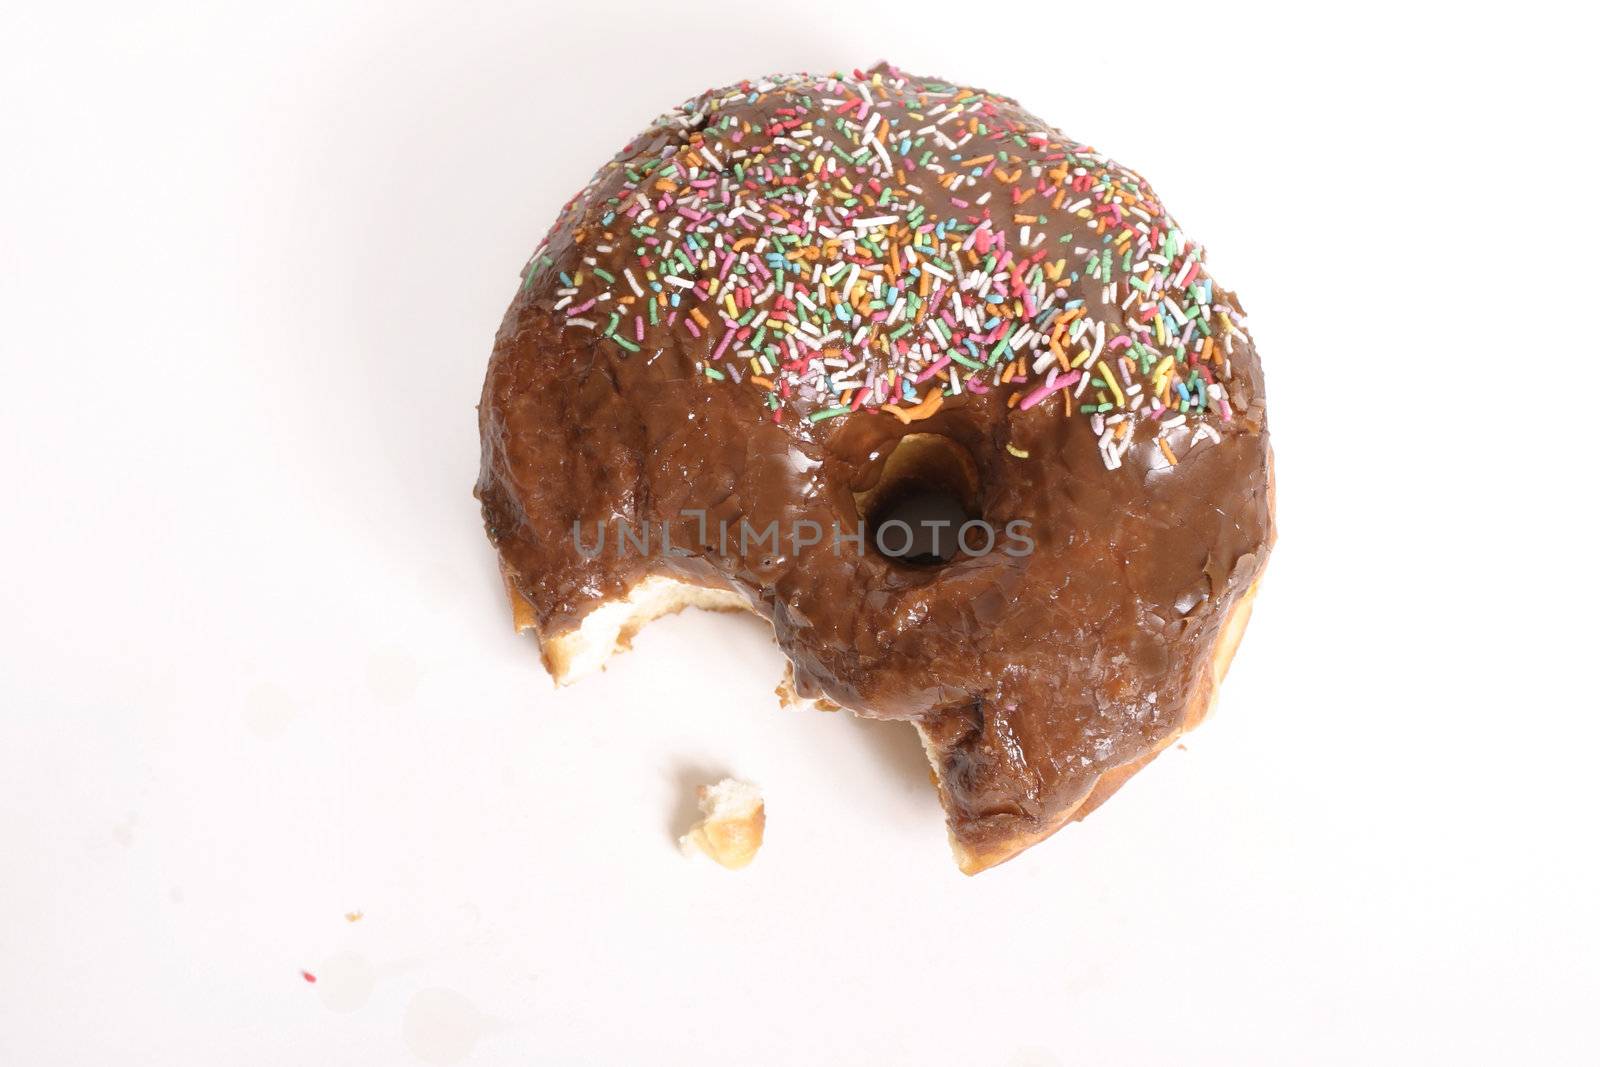 Donut bite by lovleah